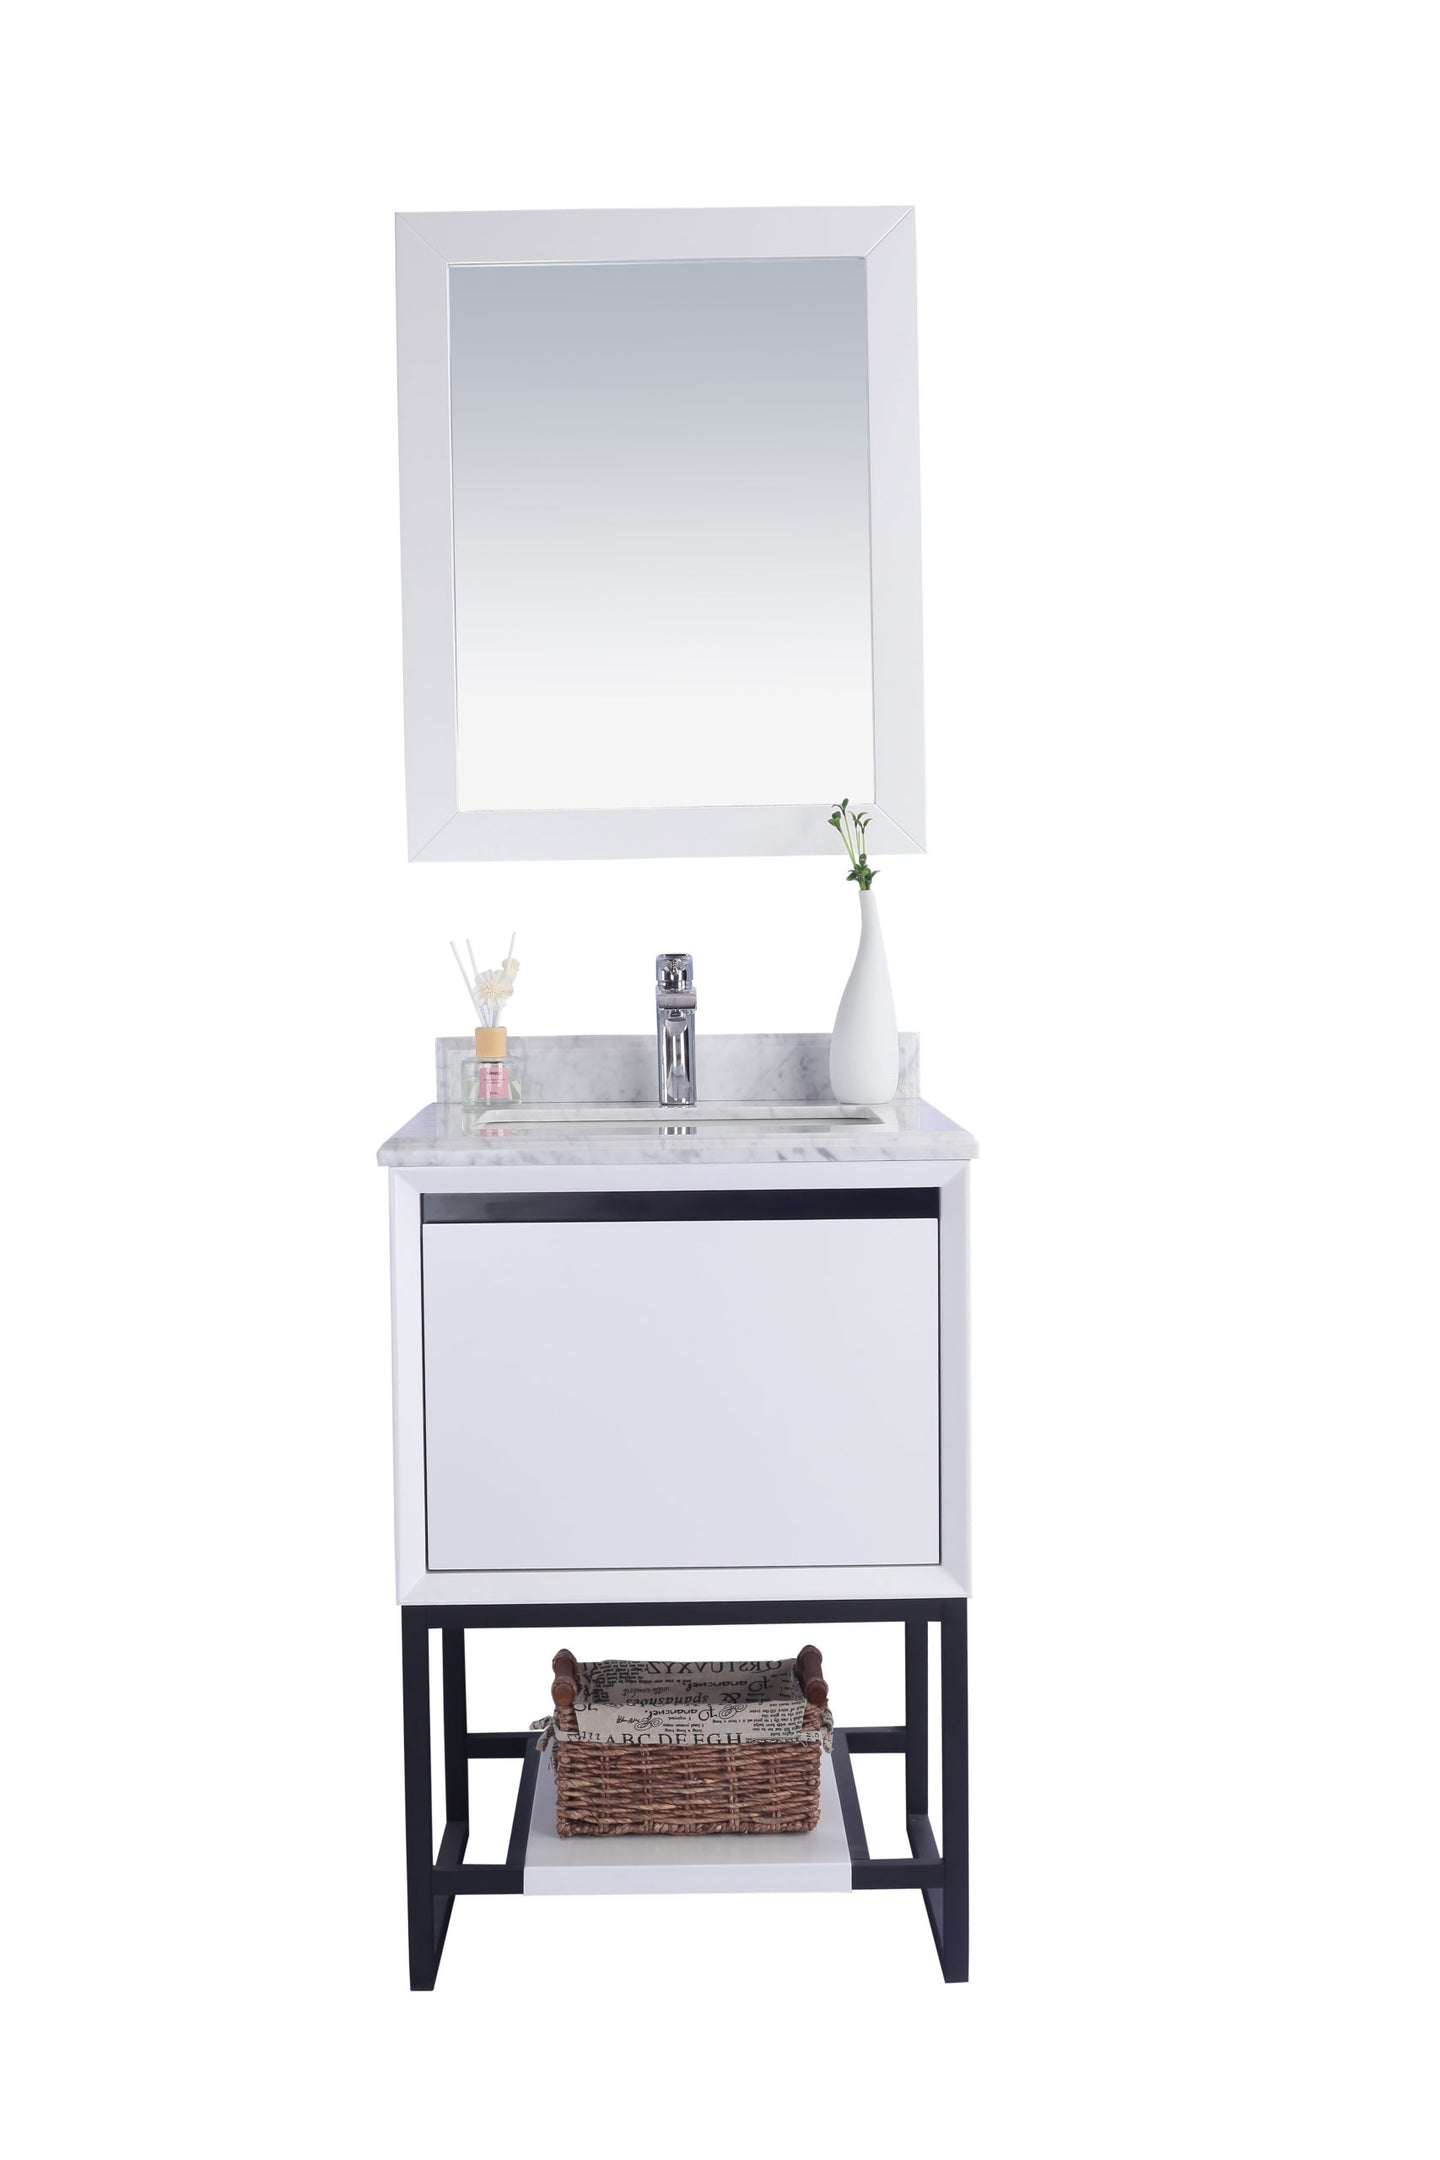 Laviva Alto White Bathroom Vanity Set in Sizes 24